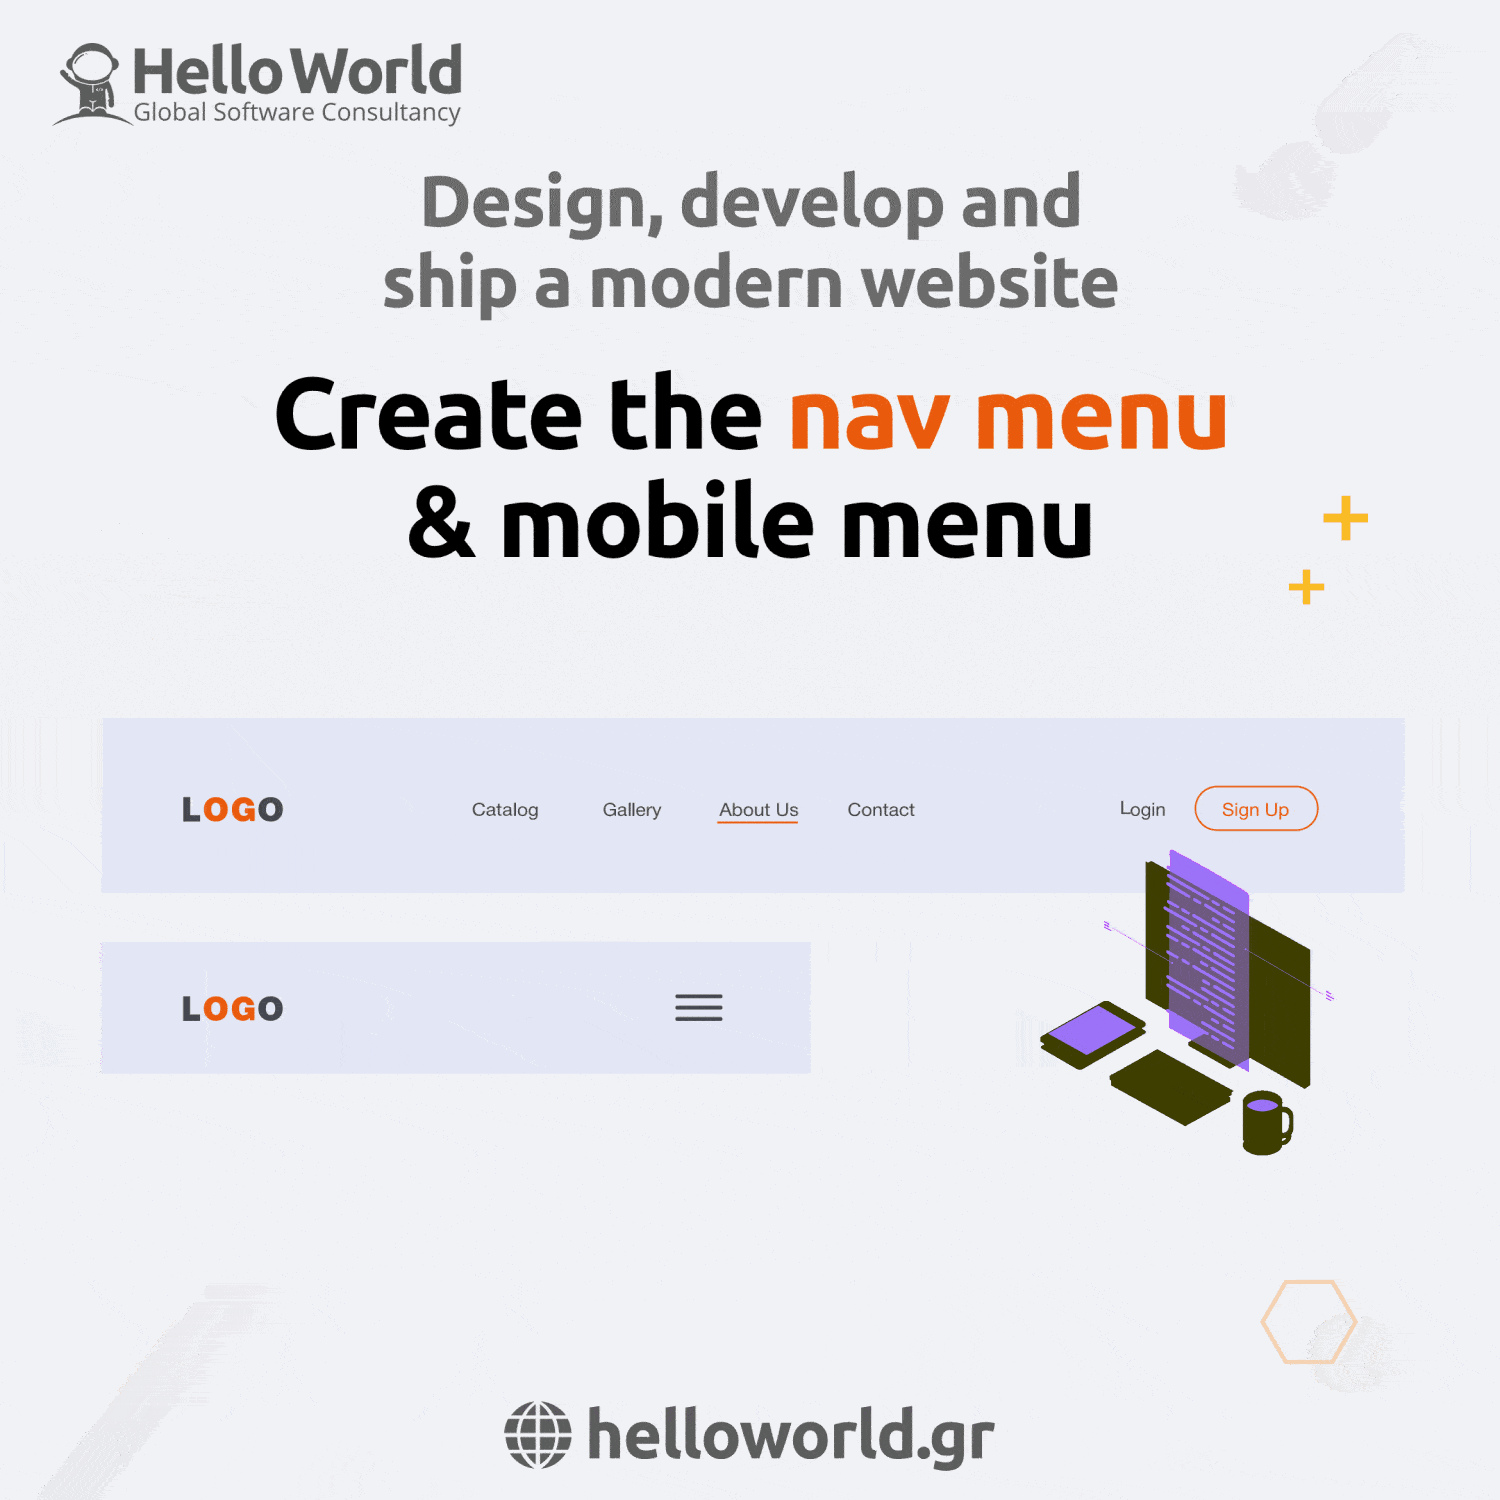 Modern Website: Create the nav menu & mobile menu